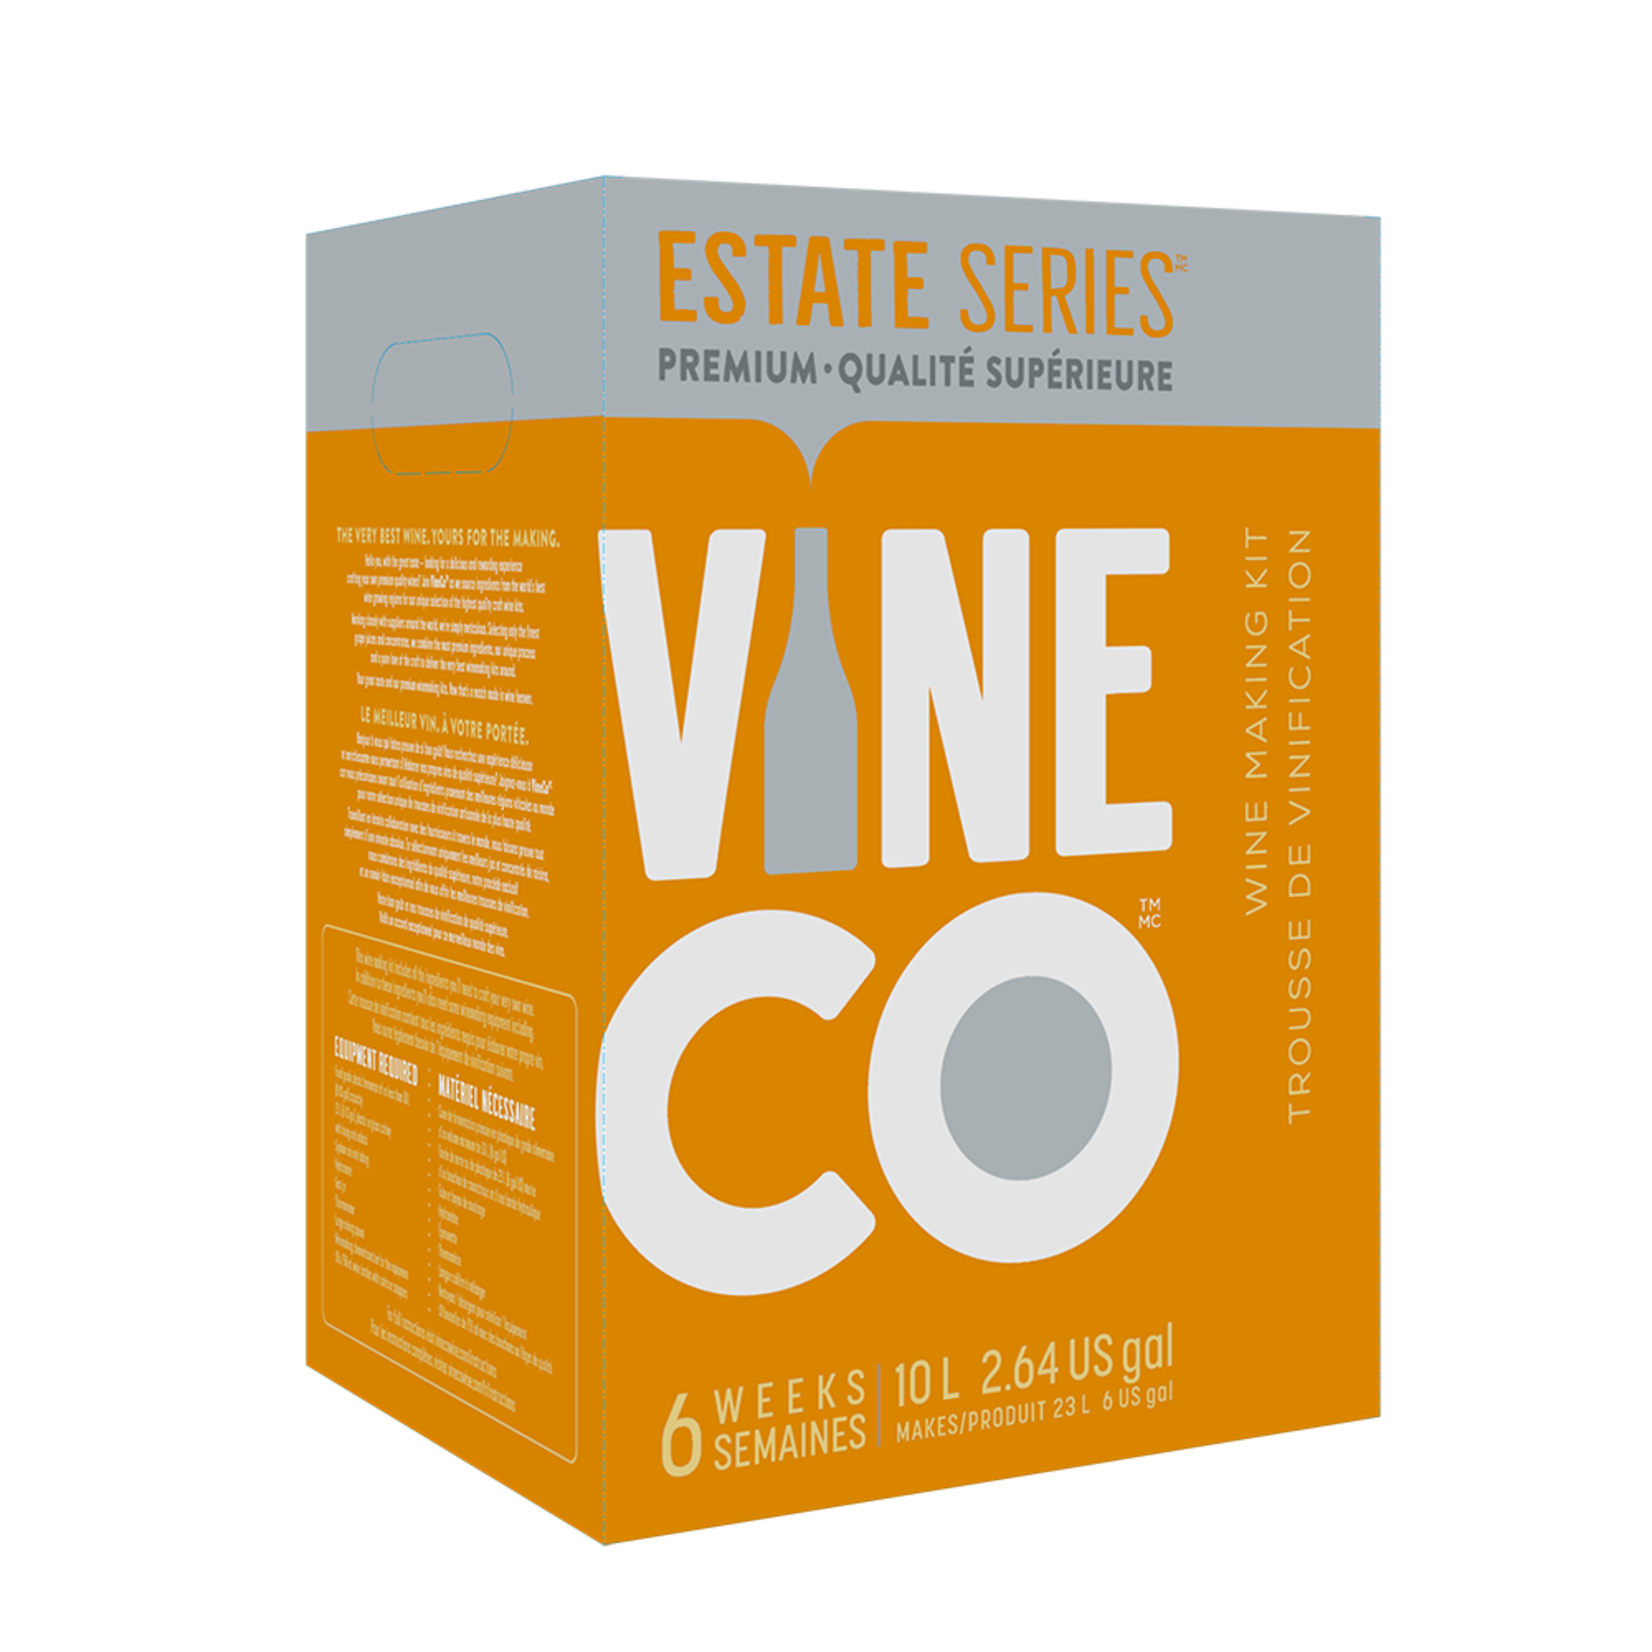 Vine Co. Estate Series Pinot Noir (Wine Kit), CHILE